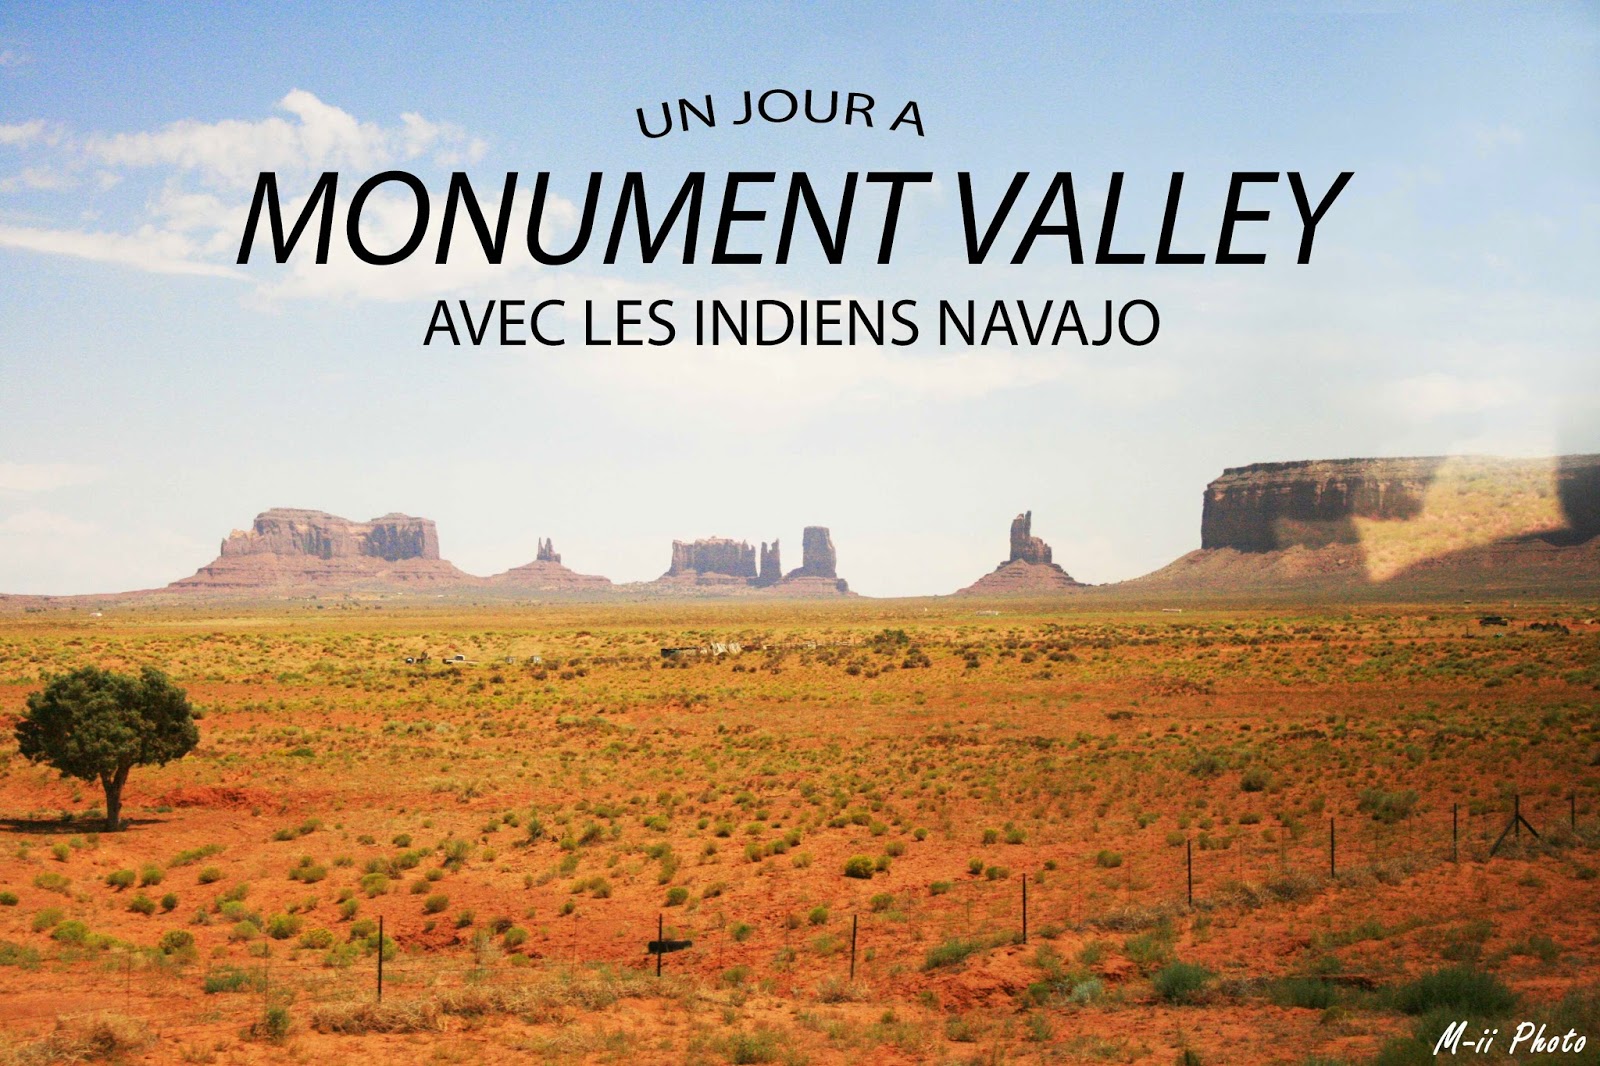 M-ii Photo: Monument Valley